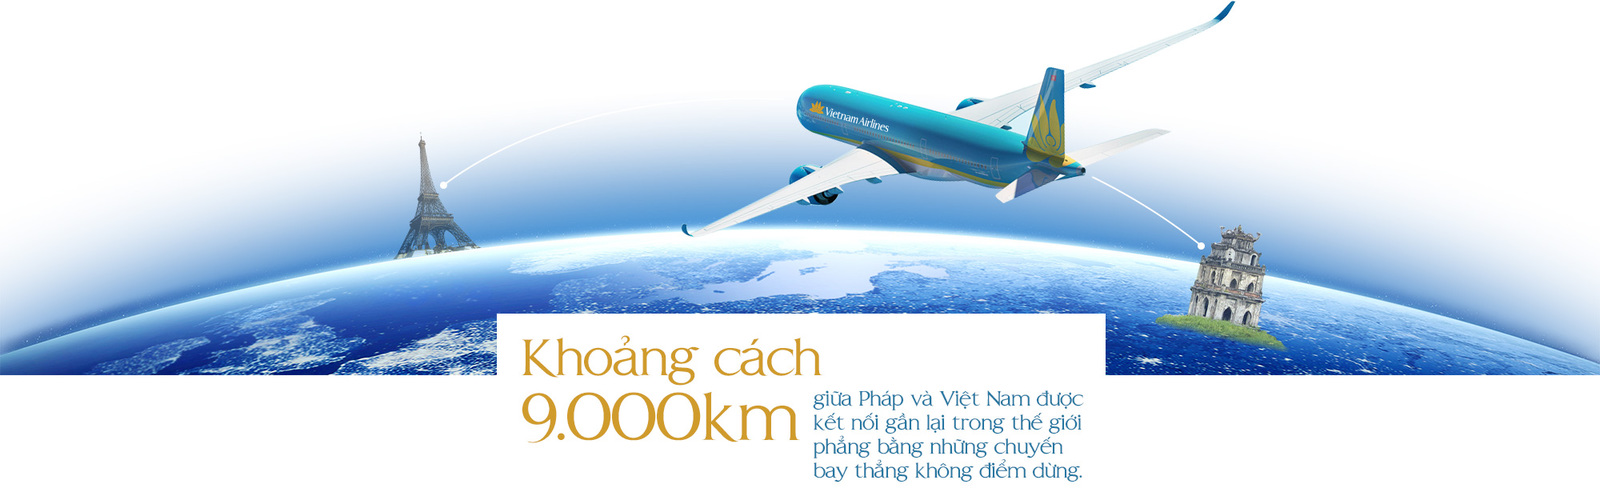 Reprise des vols internationaux Vietnam France hanoi hoc chi minh paris